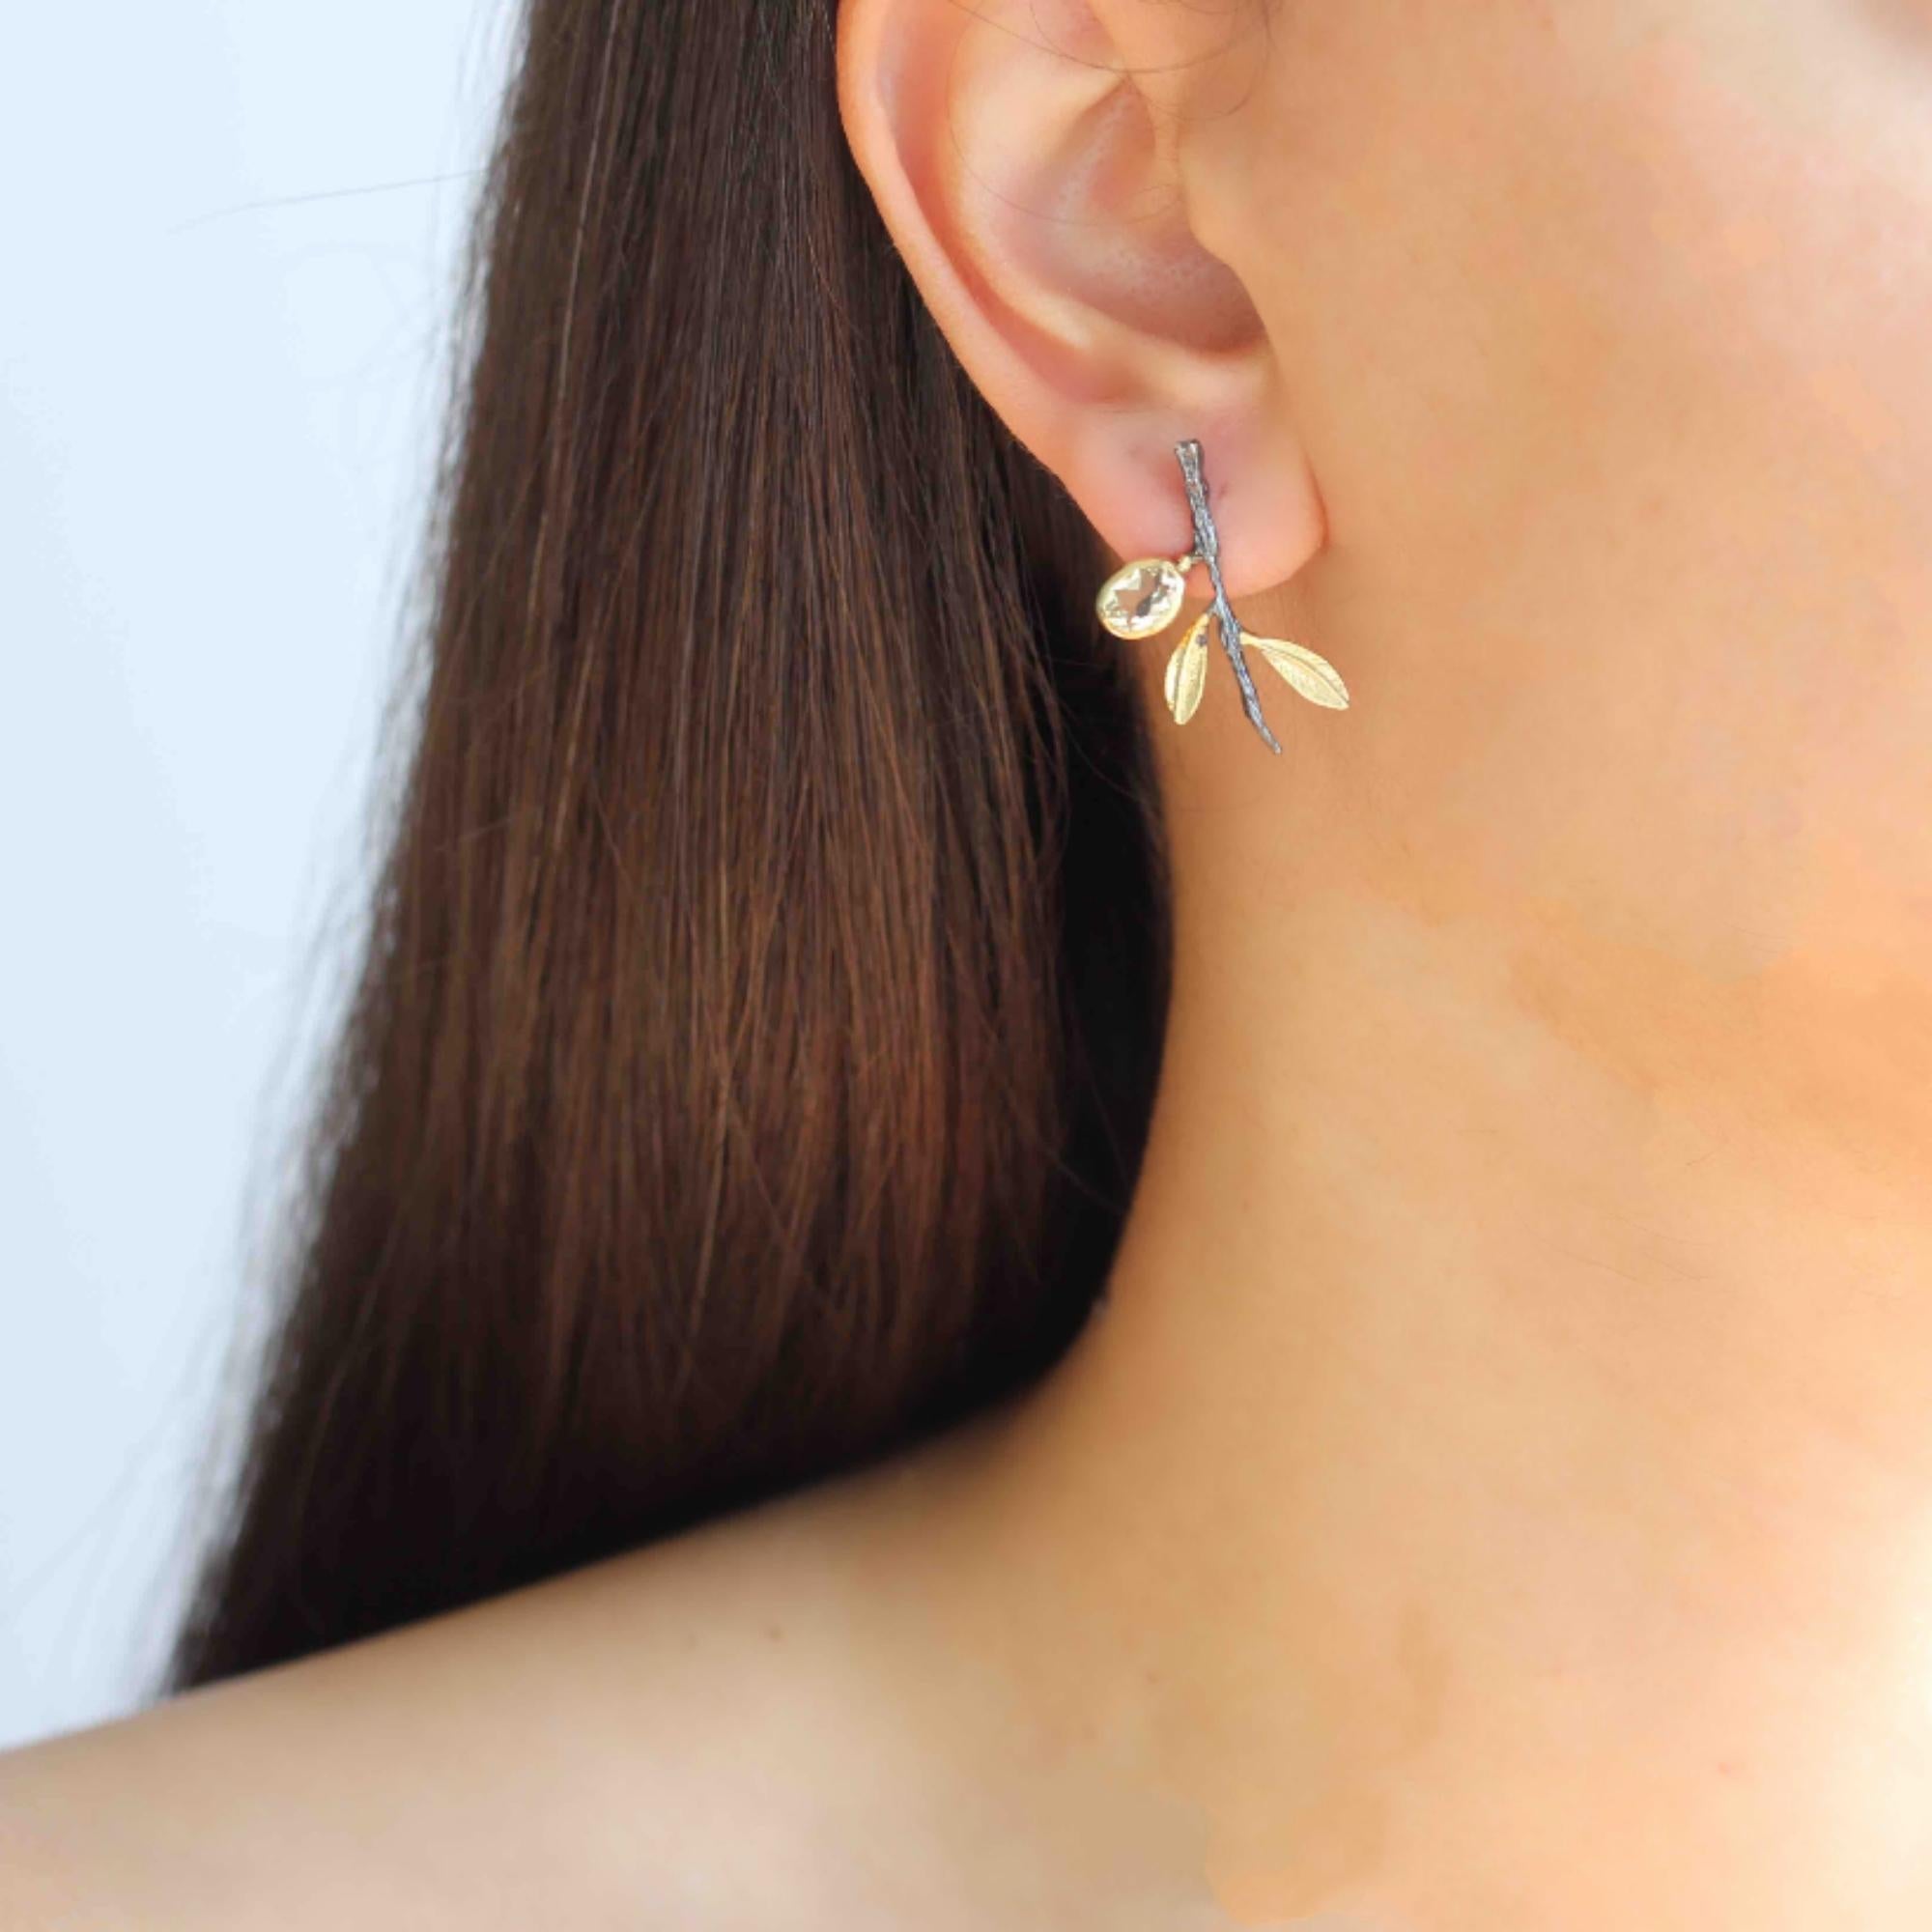 18k gold and black rhodium plated silver leaf earrings with ctirine gemstone